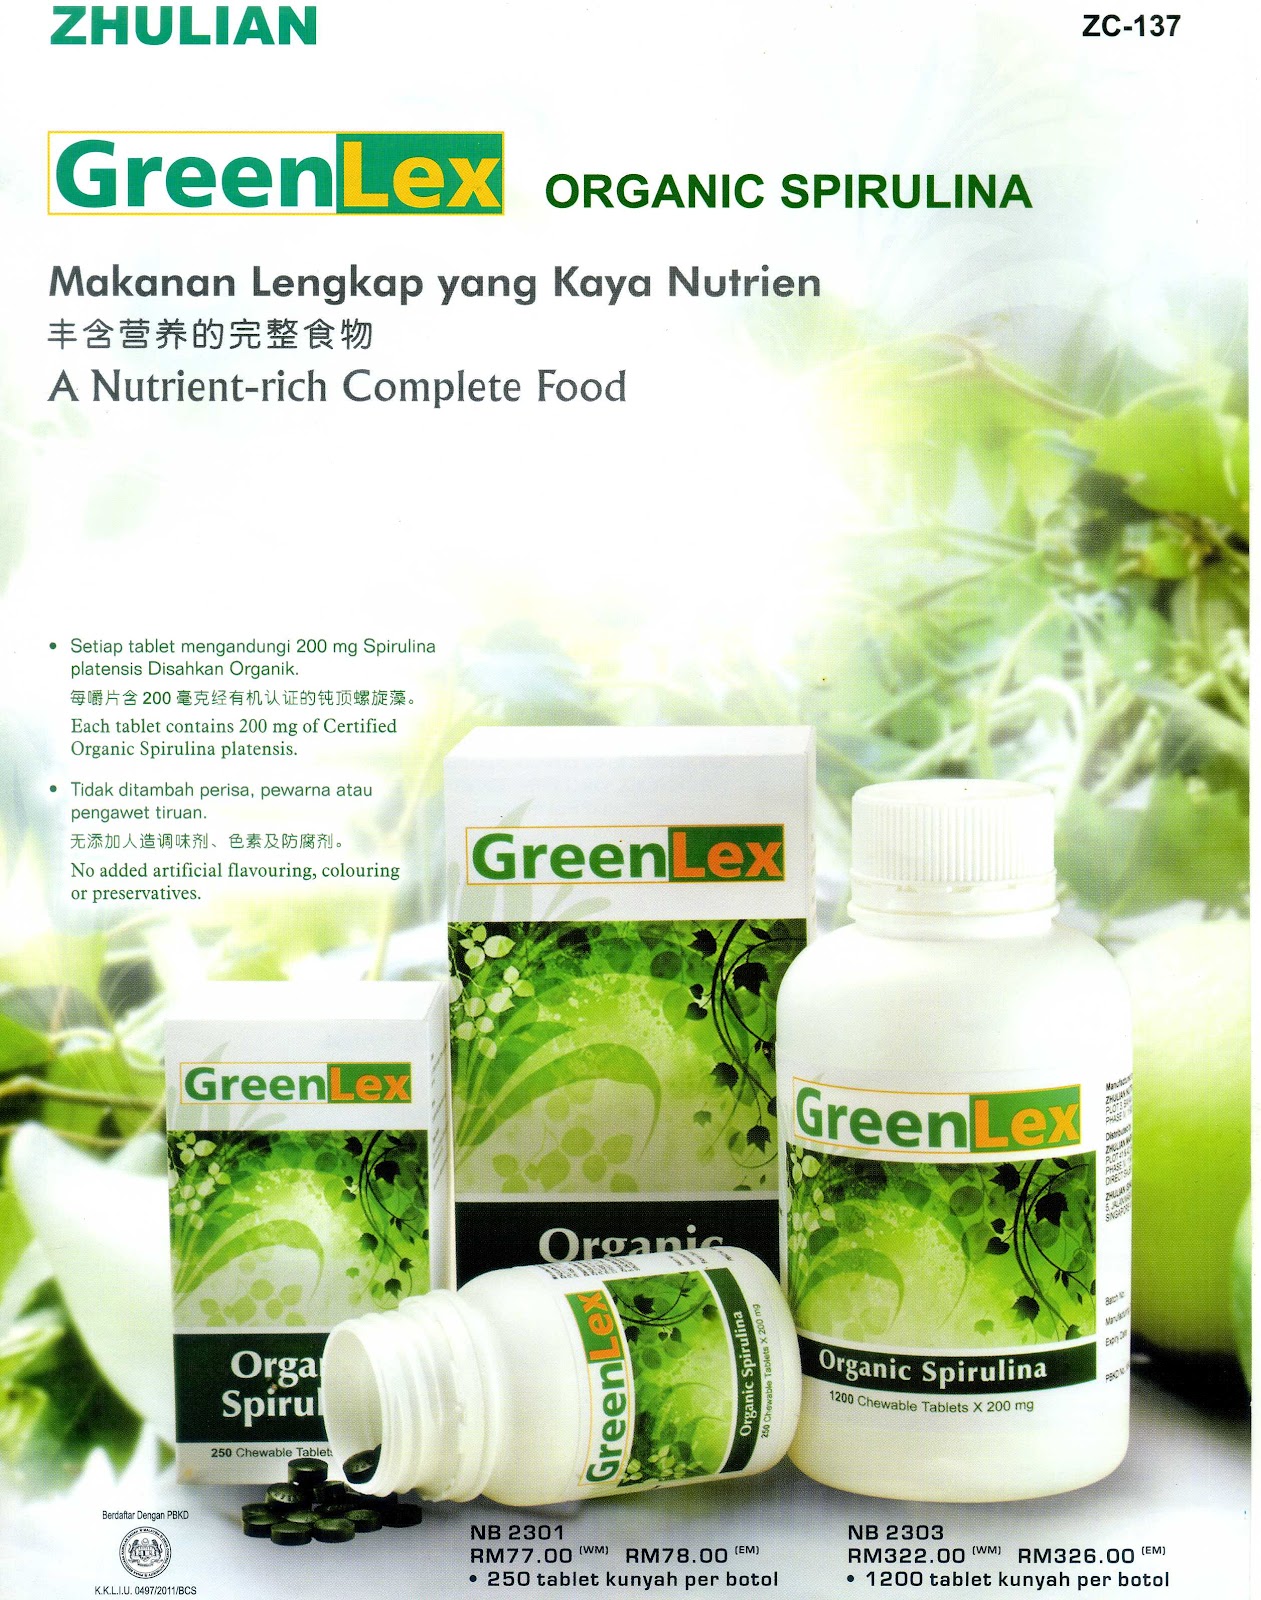 Prepaid Club Zhulian: Green Lex - ORGANIC SPIRULINA